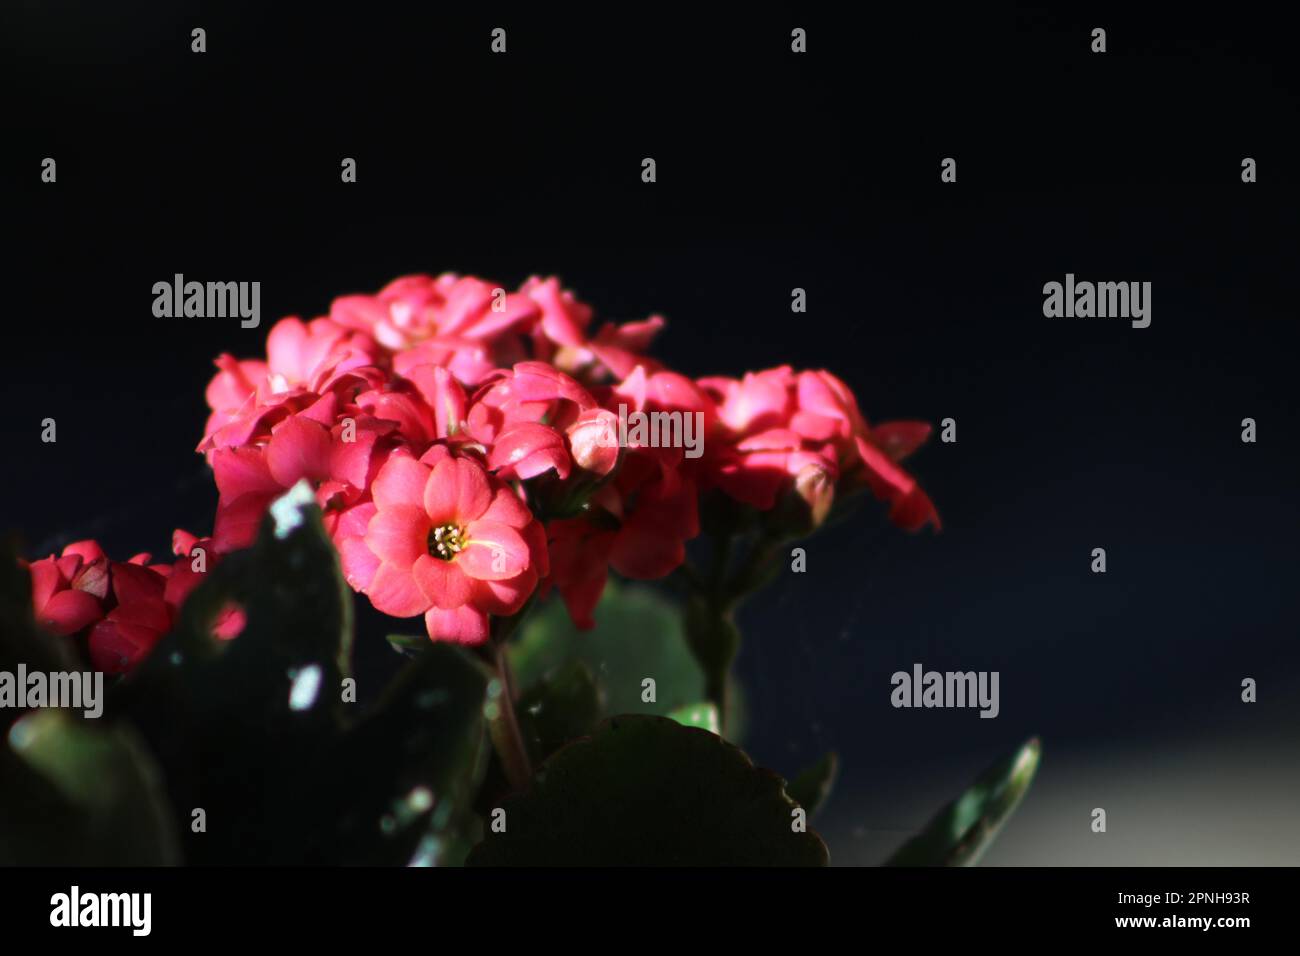 Blossom flaming katy (kalanchoe), selective focus on pink kalanchoe flower. Stock Photo